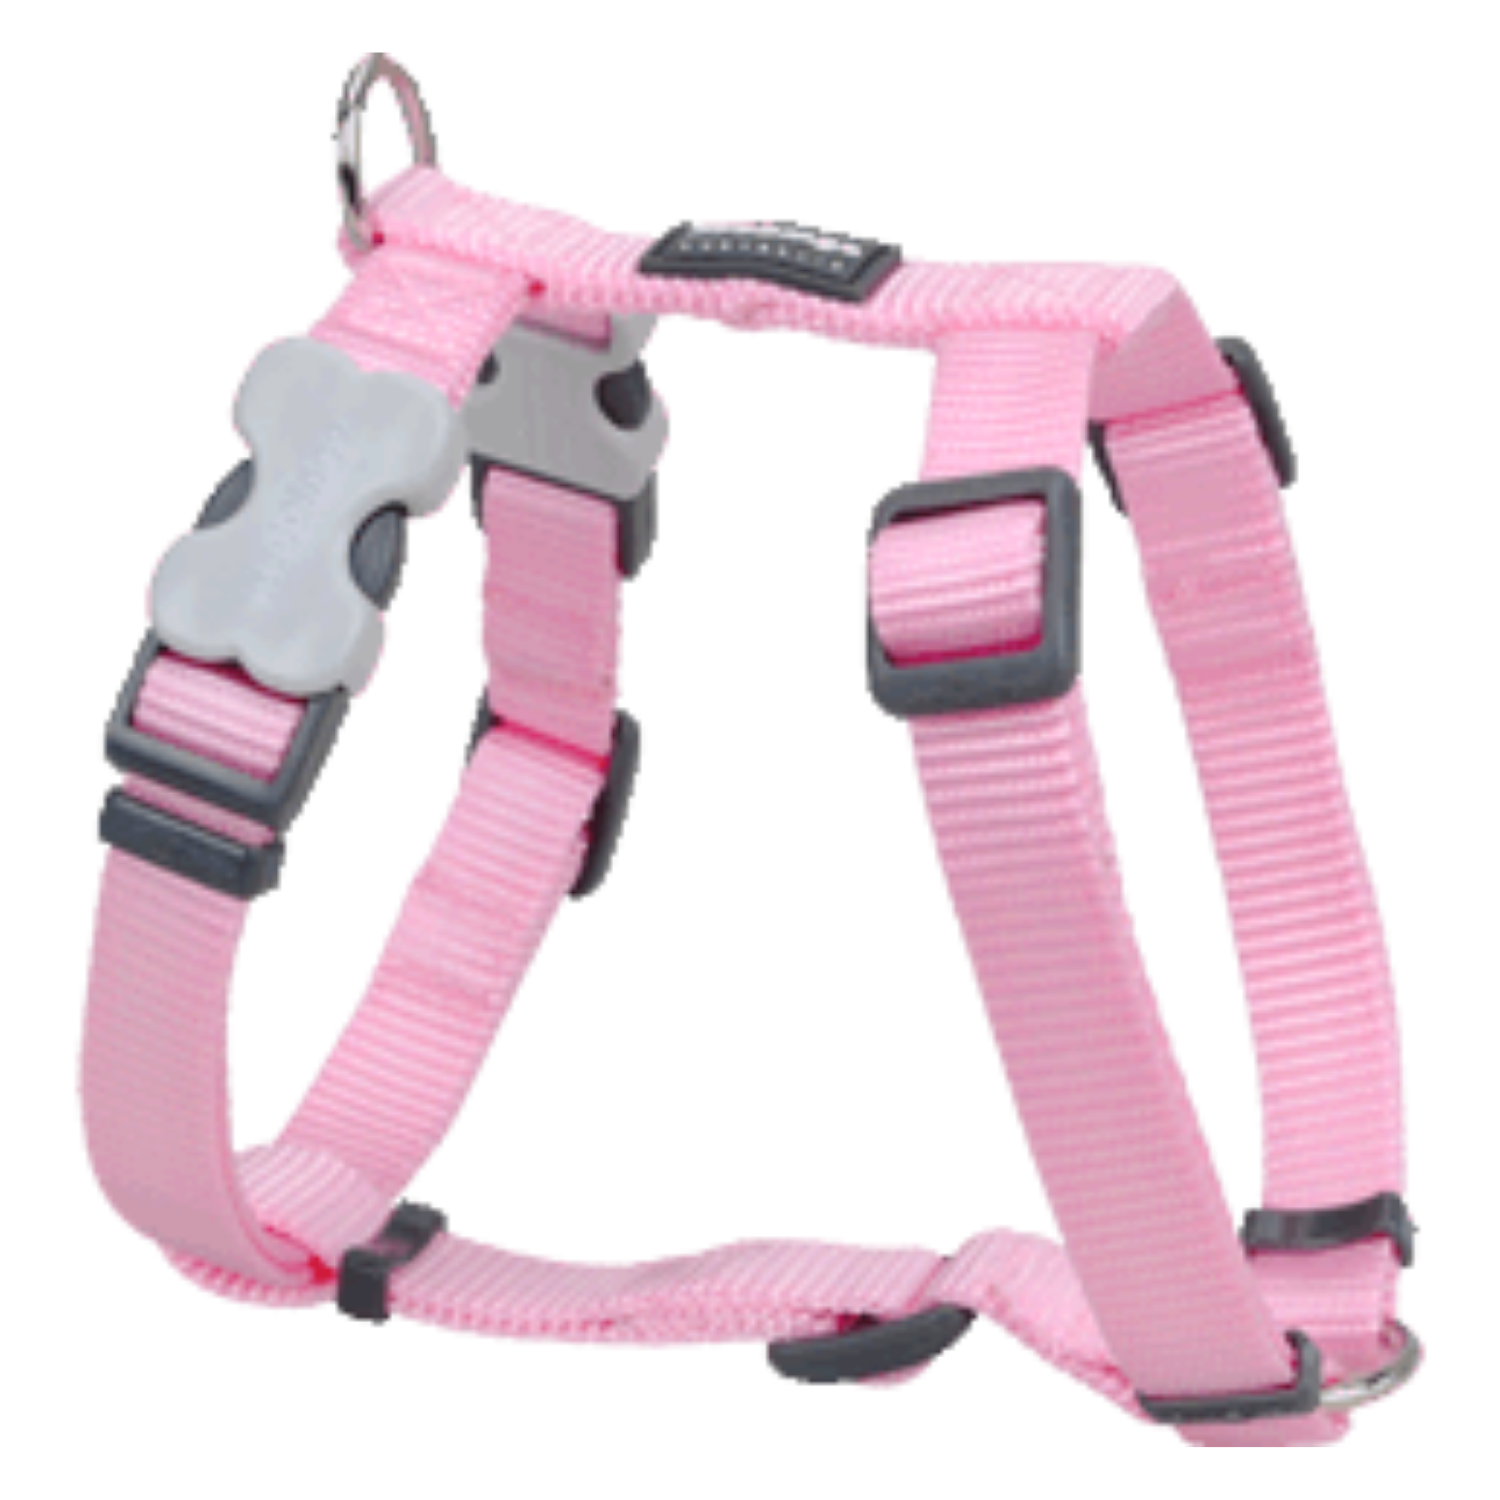 Red Dingo Dog Harness - Classic Range (Pink)